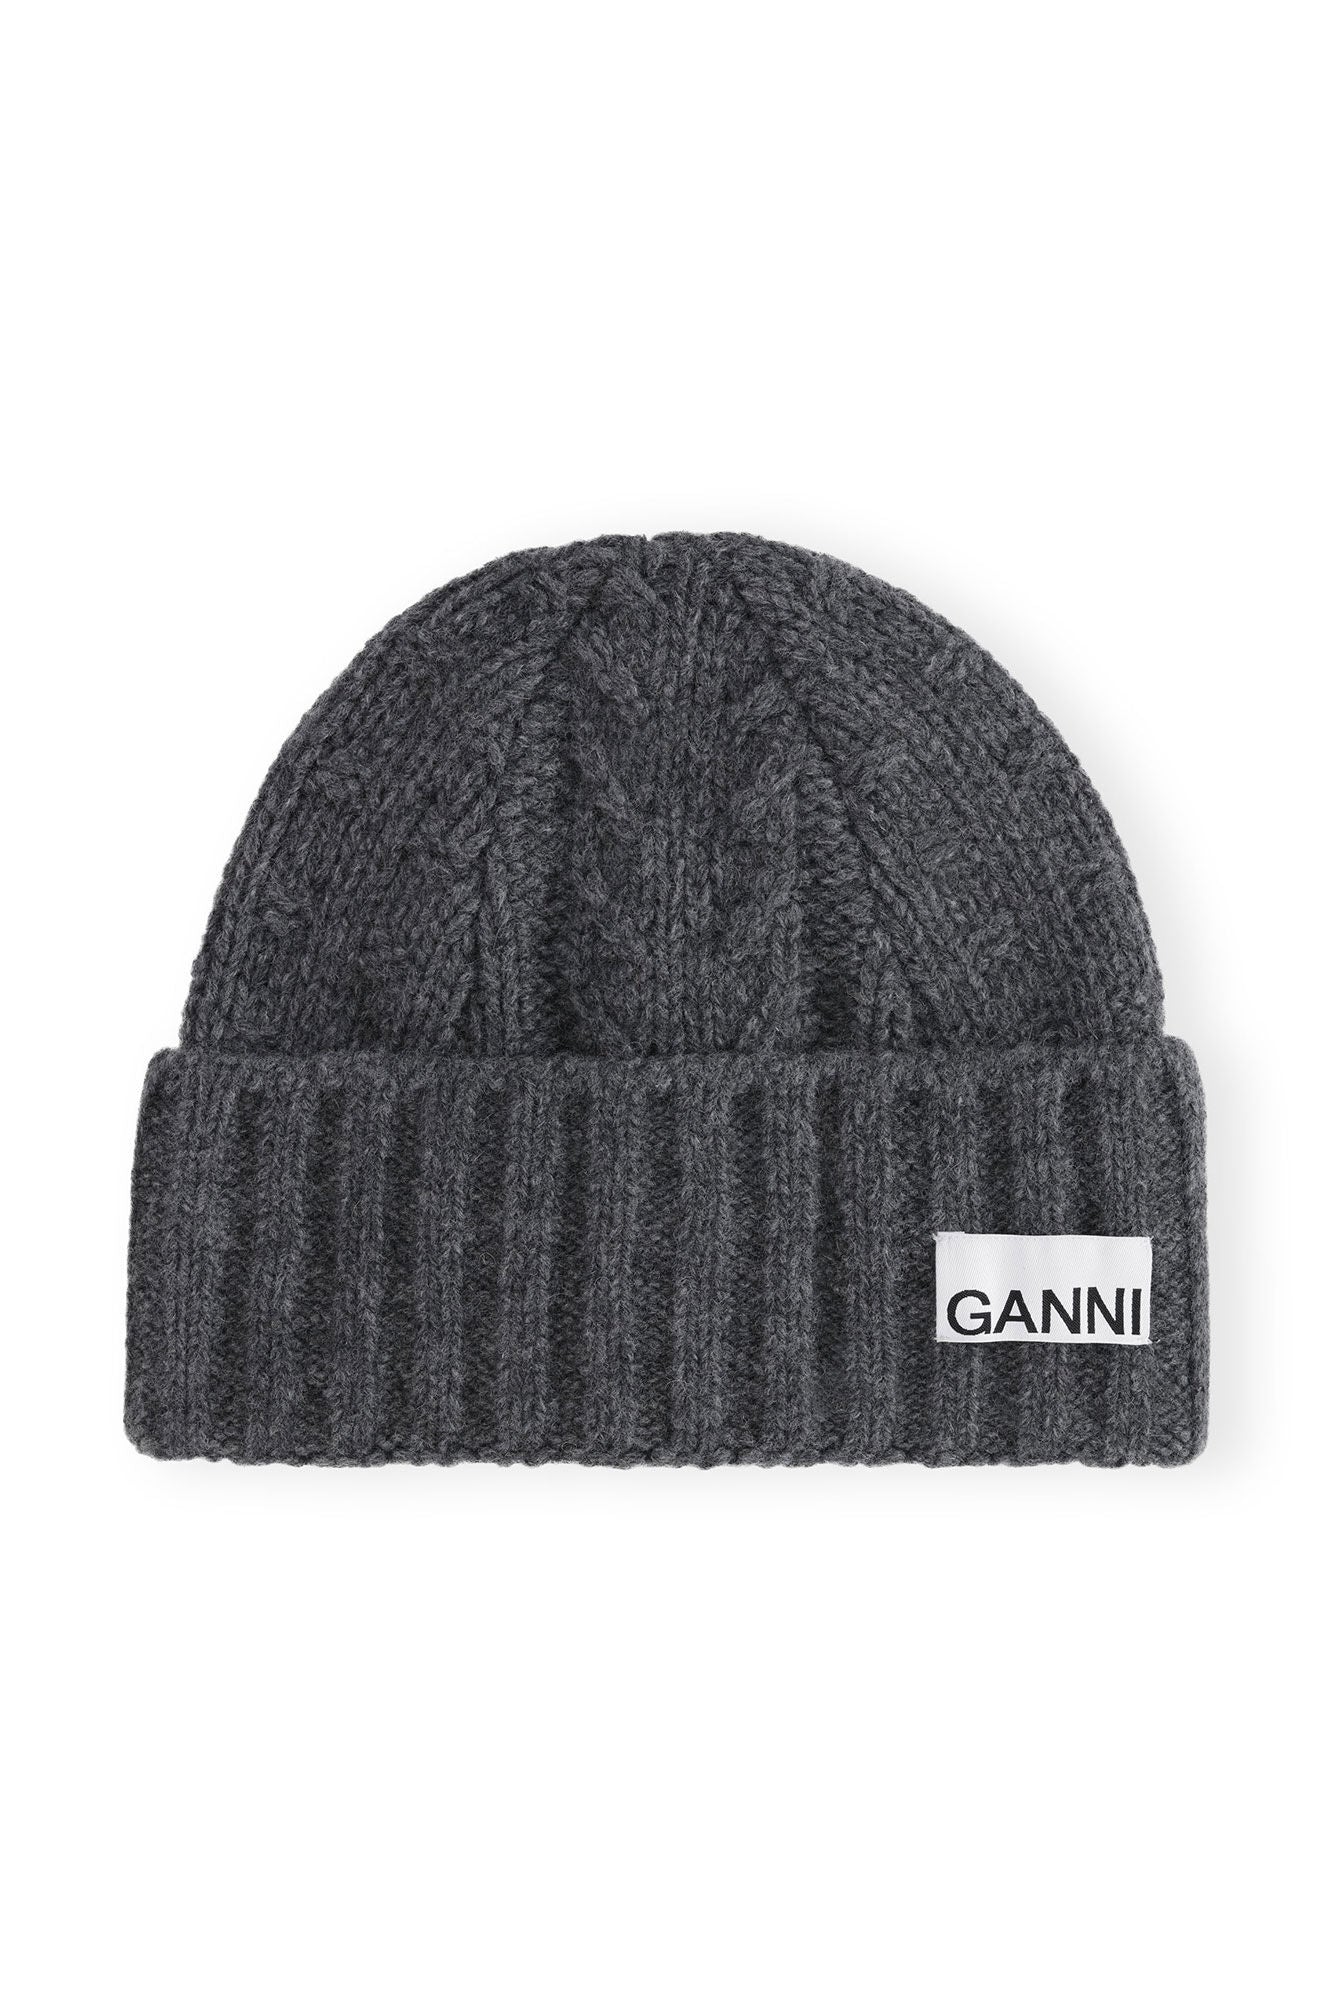 Ganni Wool Cable Beanie